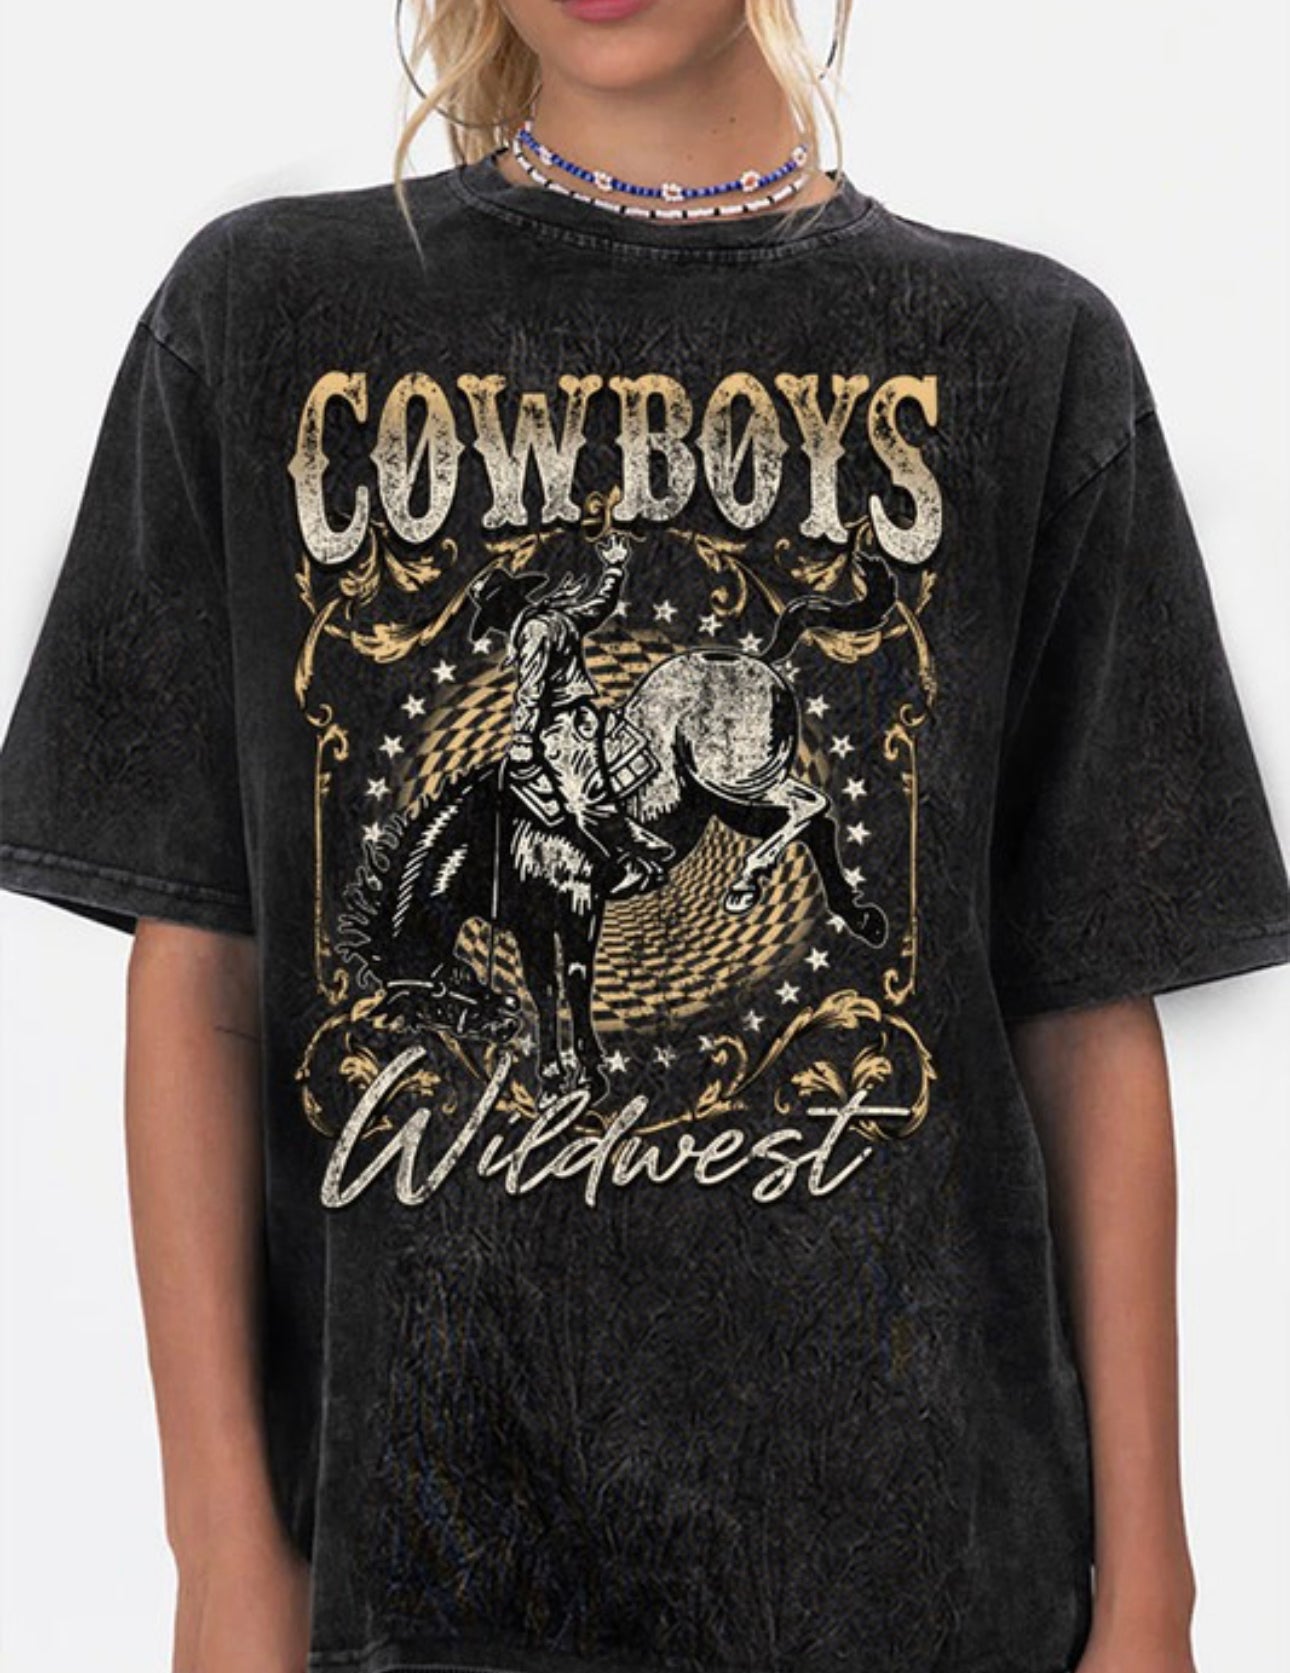 Cowboy tee shirt